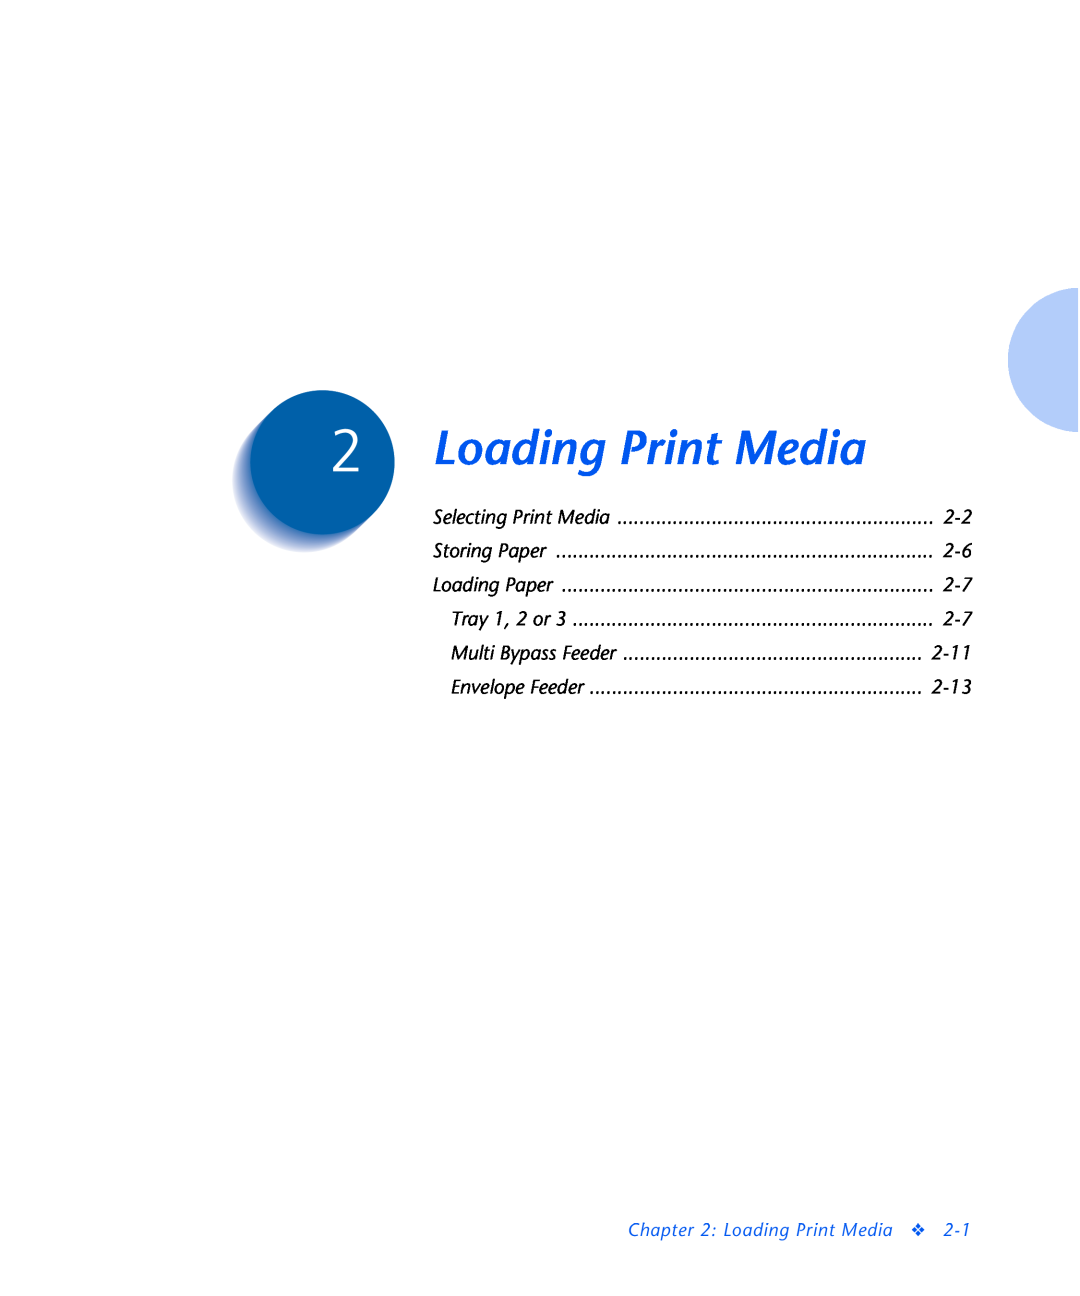 Xerox N2125 manual Loading Print Media, Storing Paper, Loading Paper, Tray 1, 2 or, Envelope Feeder 